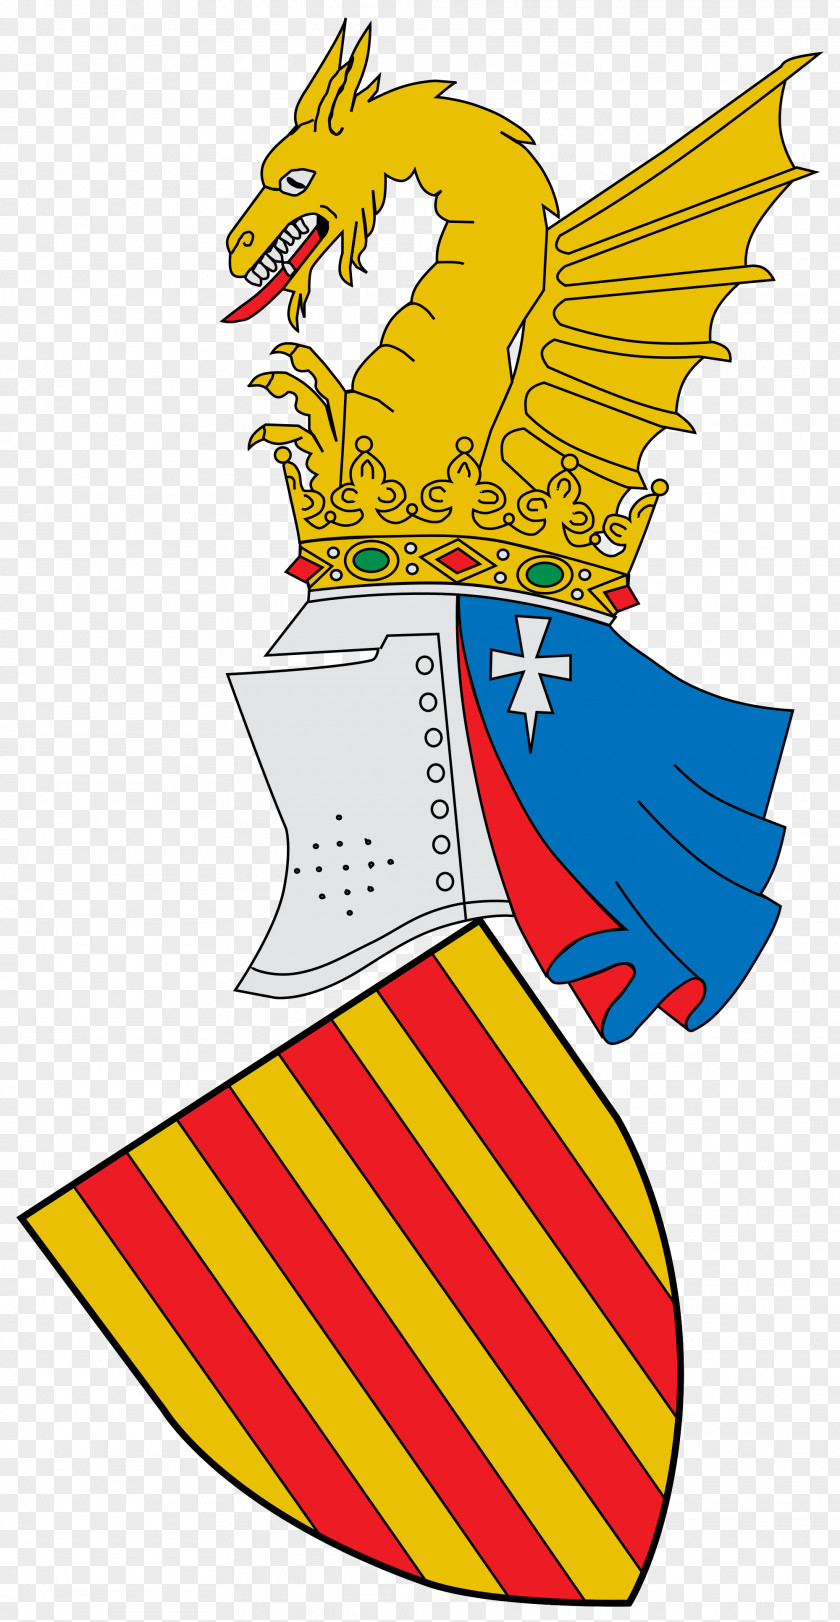 Program Ape Kingdom Of Valencia Tirant Lo Blanch Coat Arms Escudo Da Comunidade Valenciana PNG